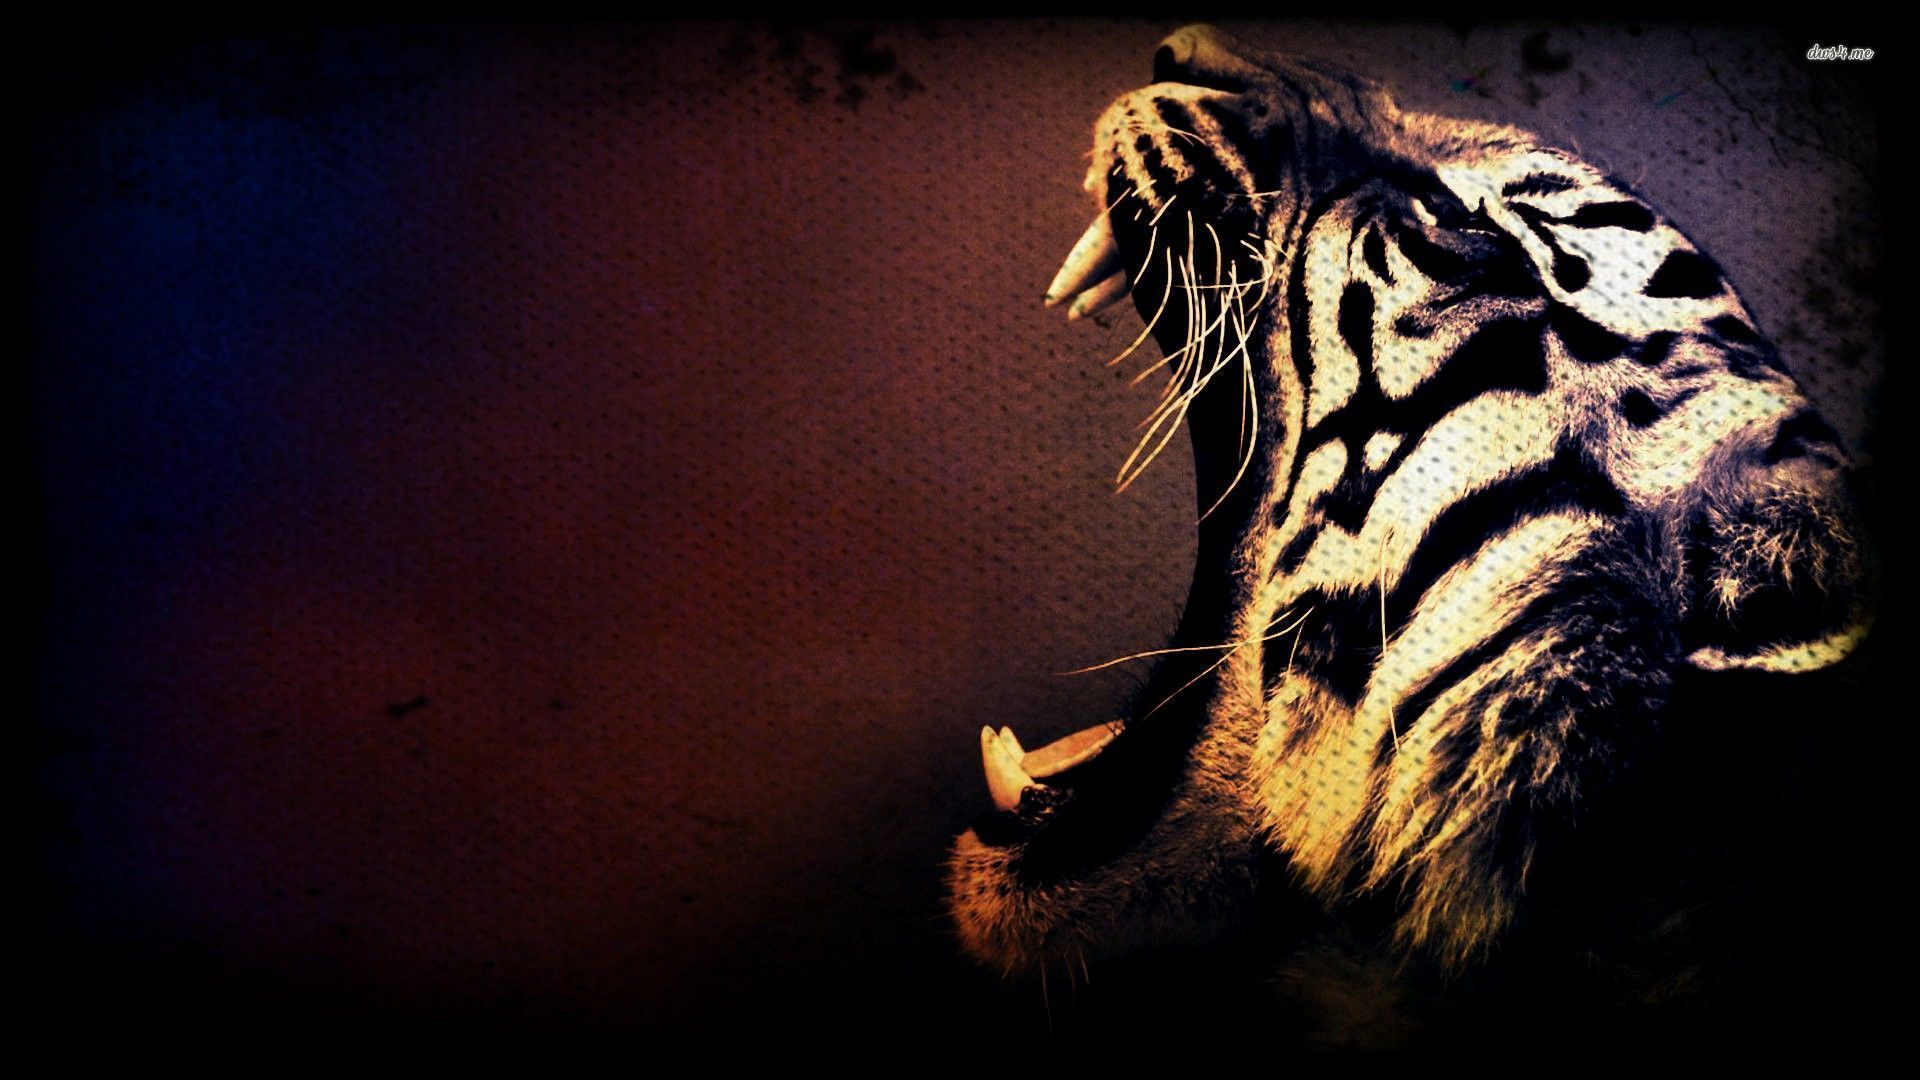 Roaring tiger wallpaper - Digital Art wallpapers - #21968